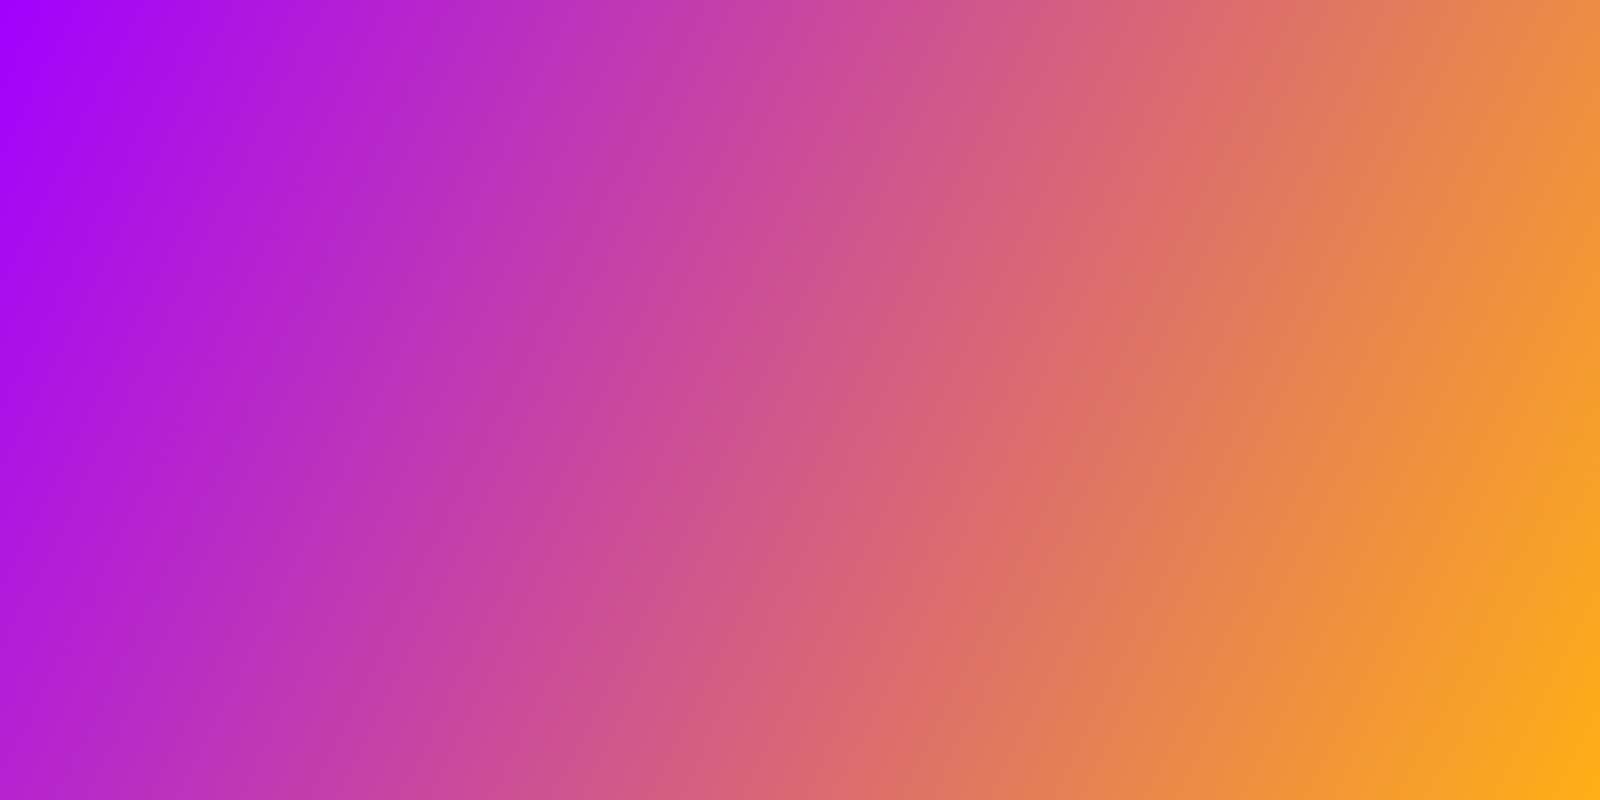 purple to orange gradient puzzle online from photo